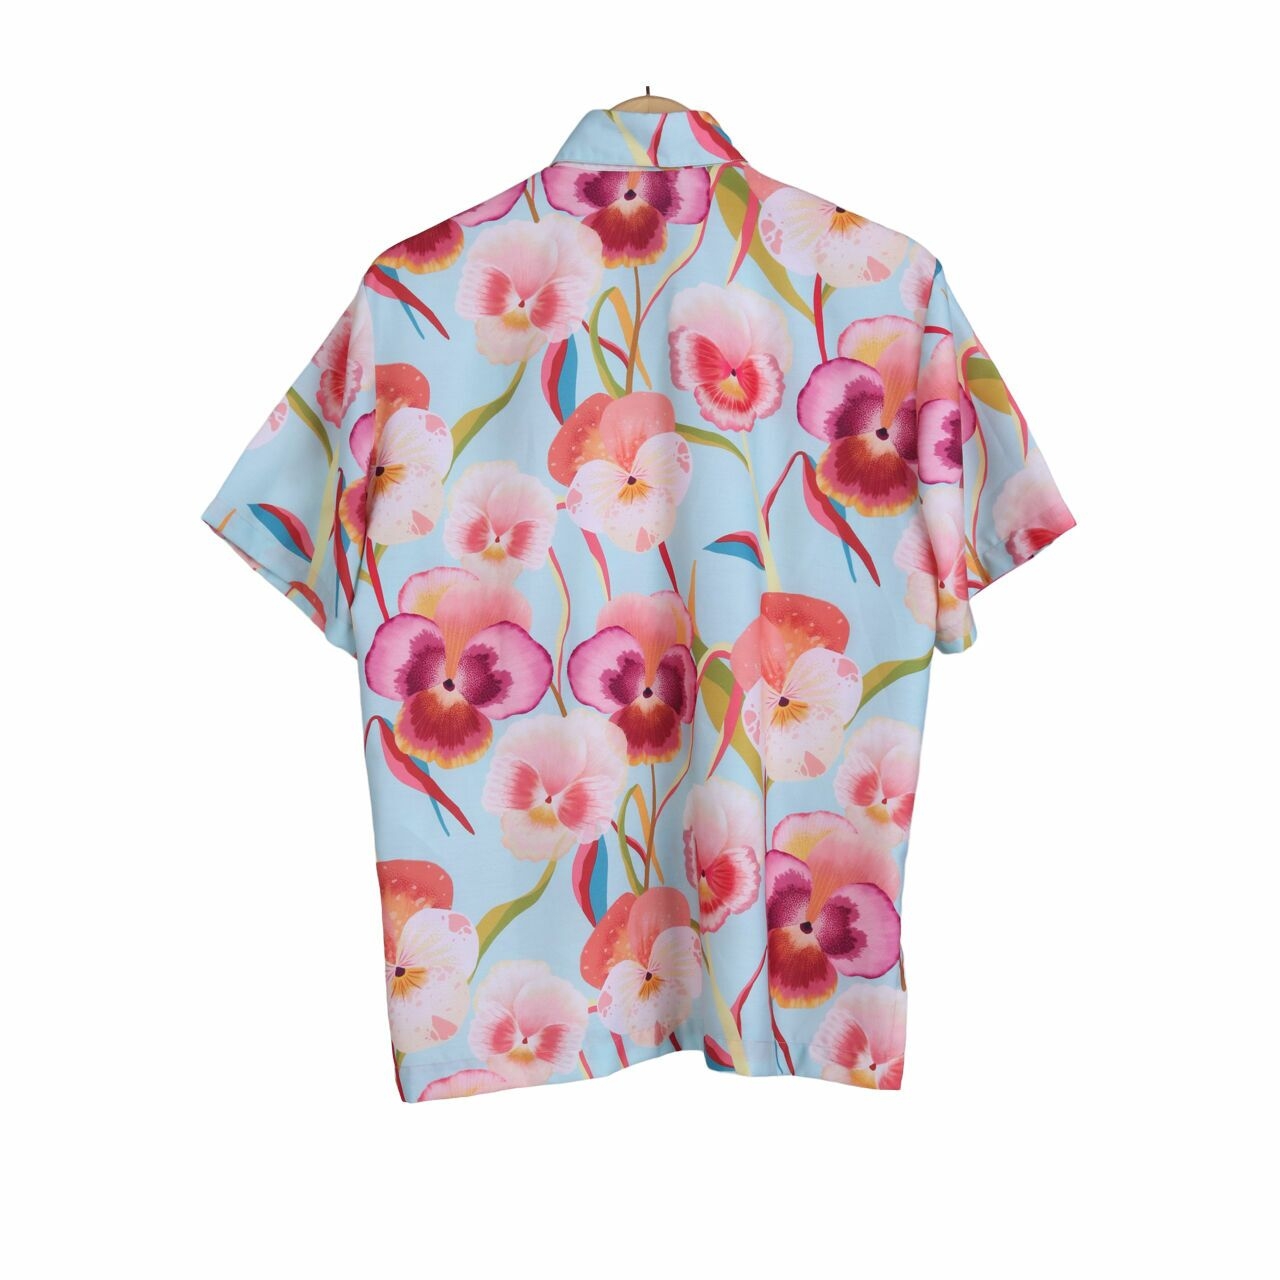 K.A.L.A studio x Mader Tosca Floral Shirt